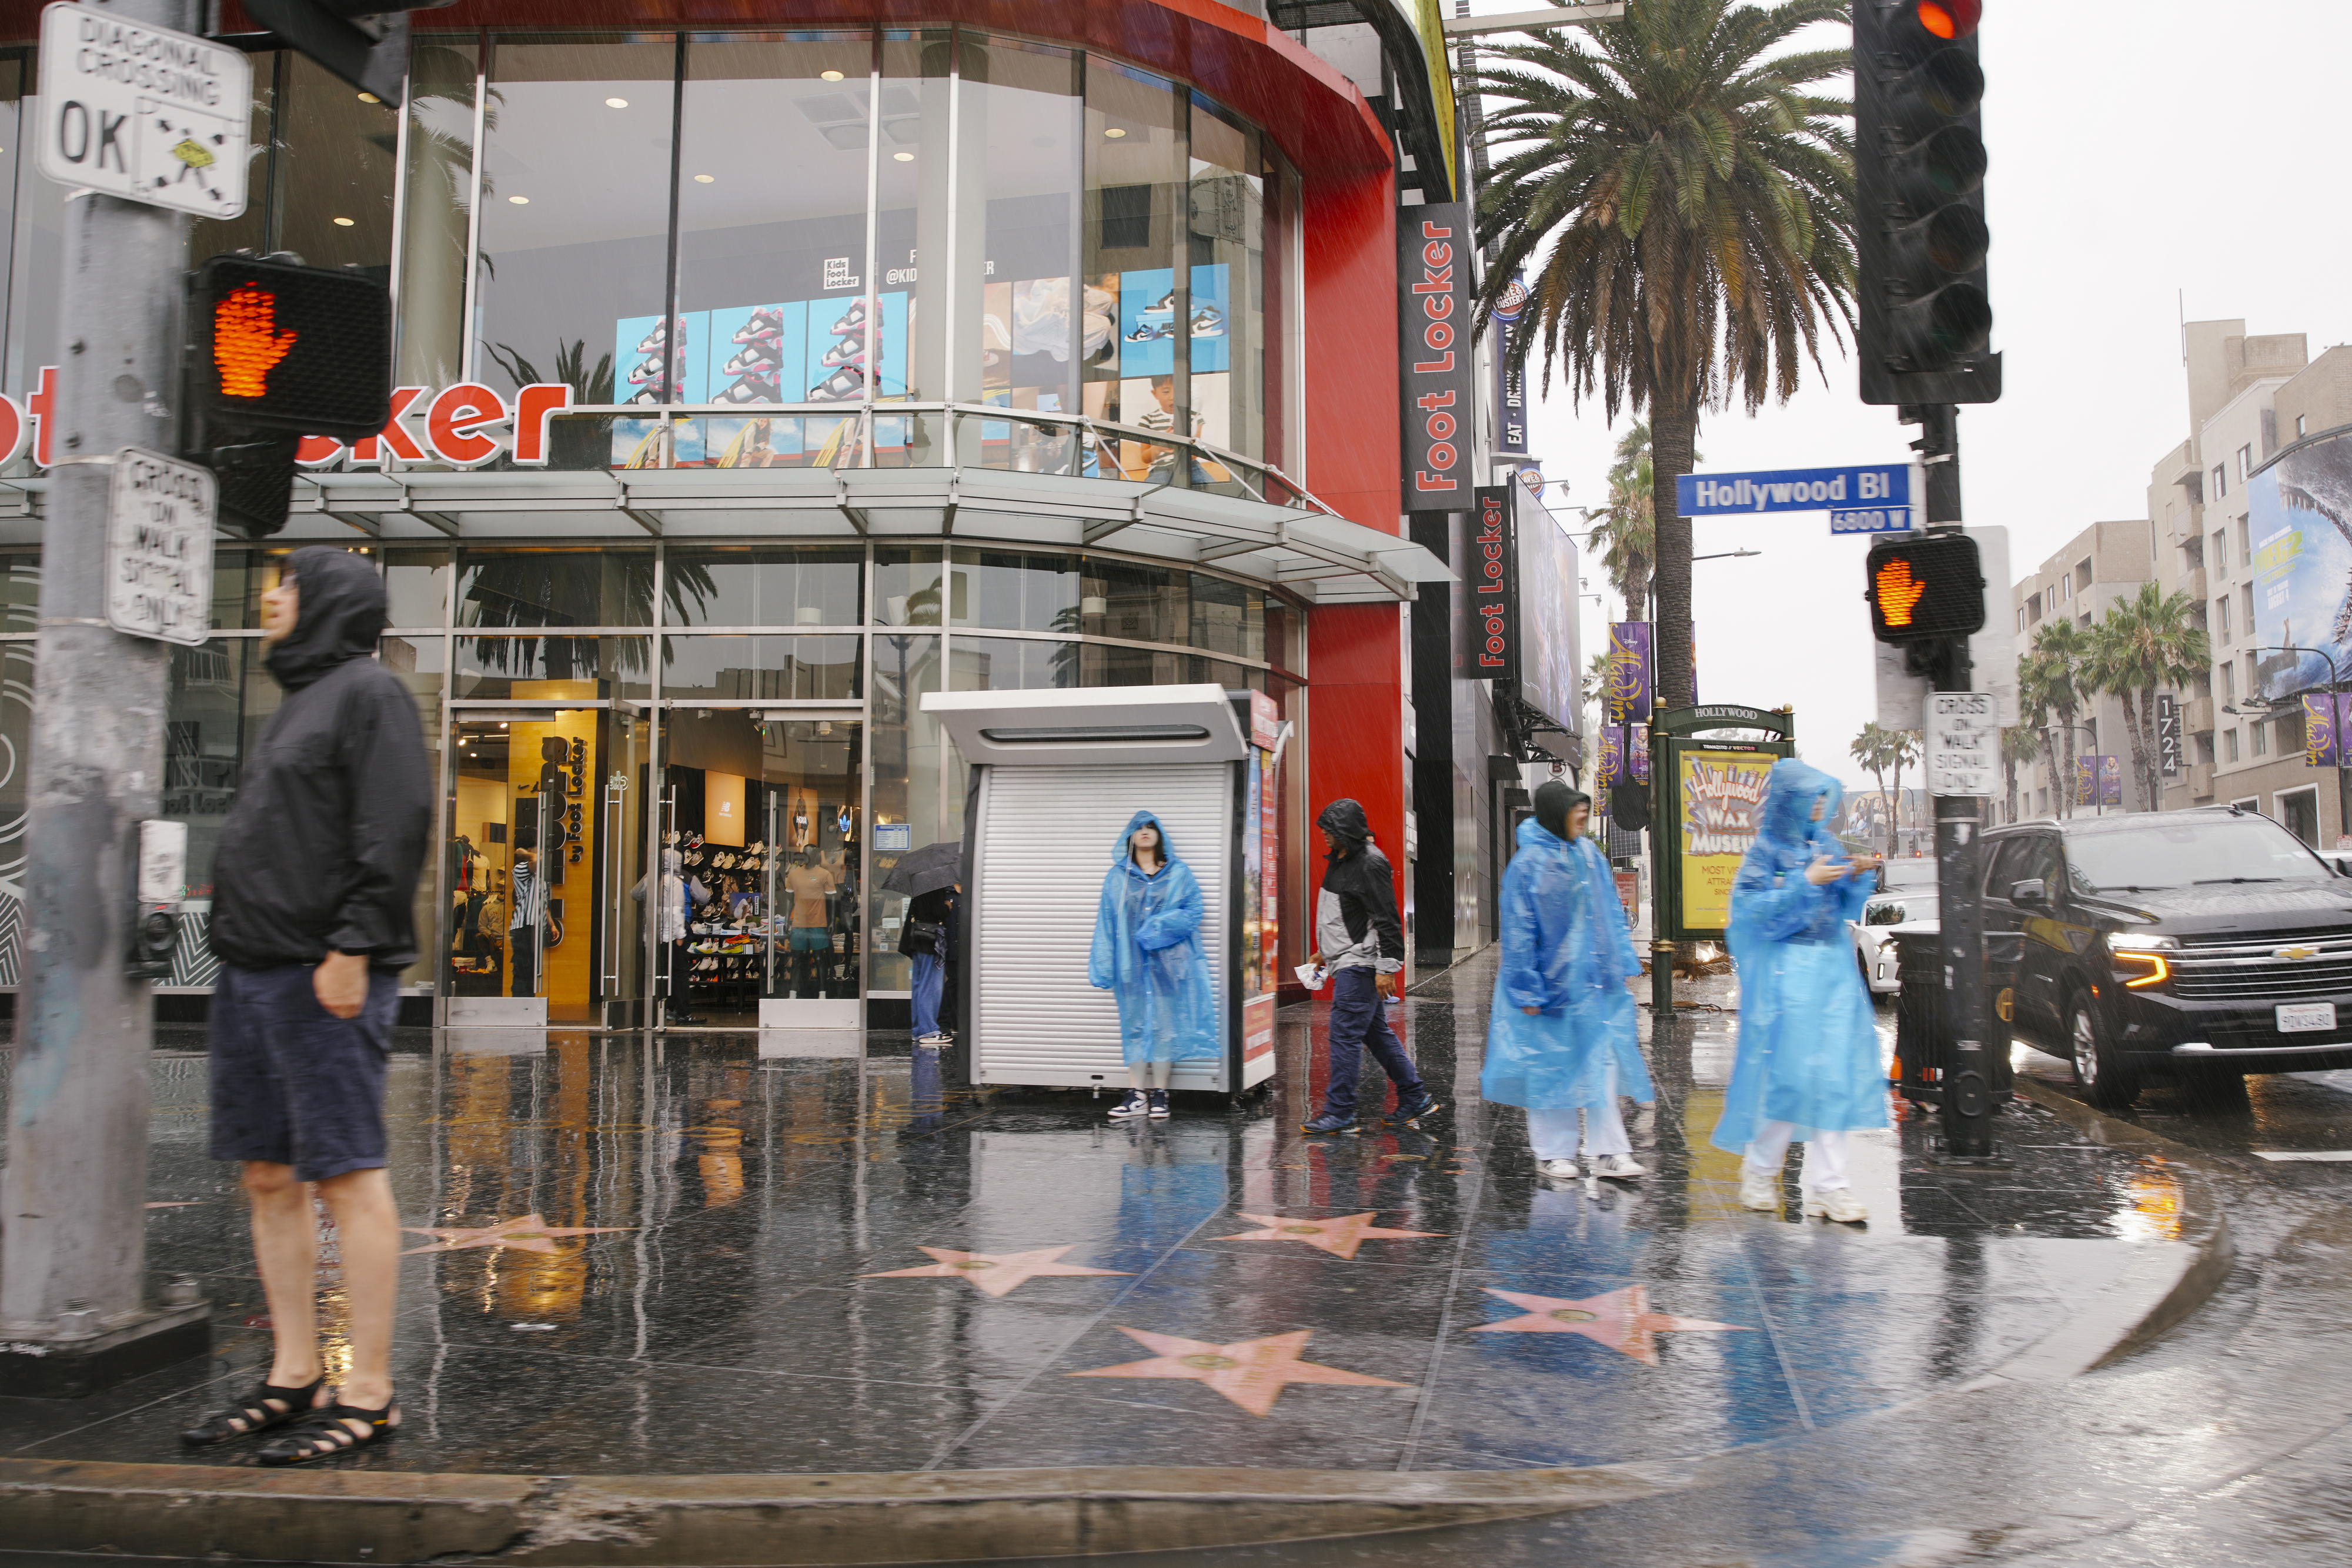 People walking on the sidewalk in the rain